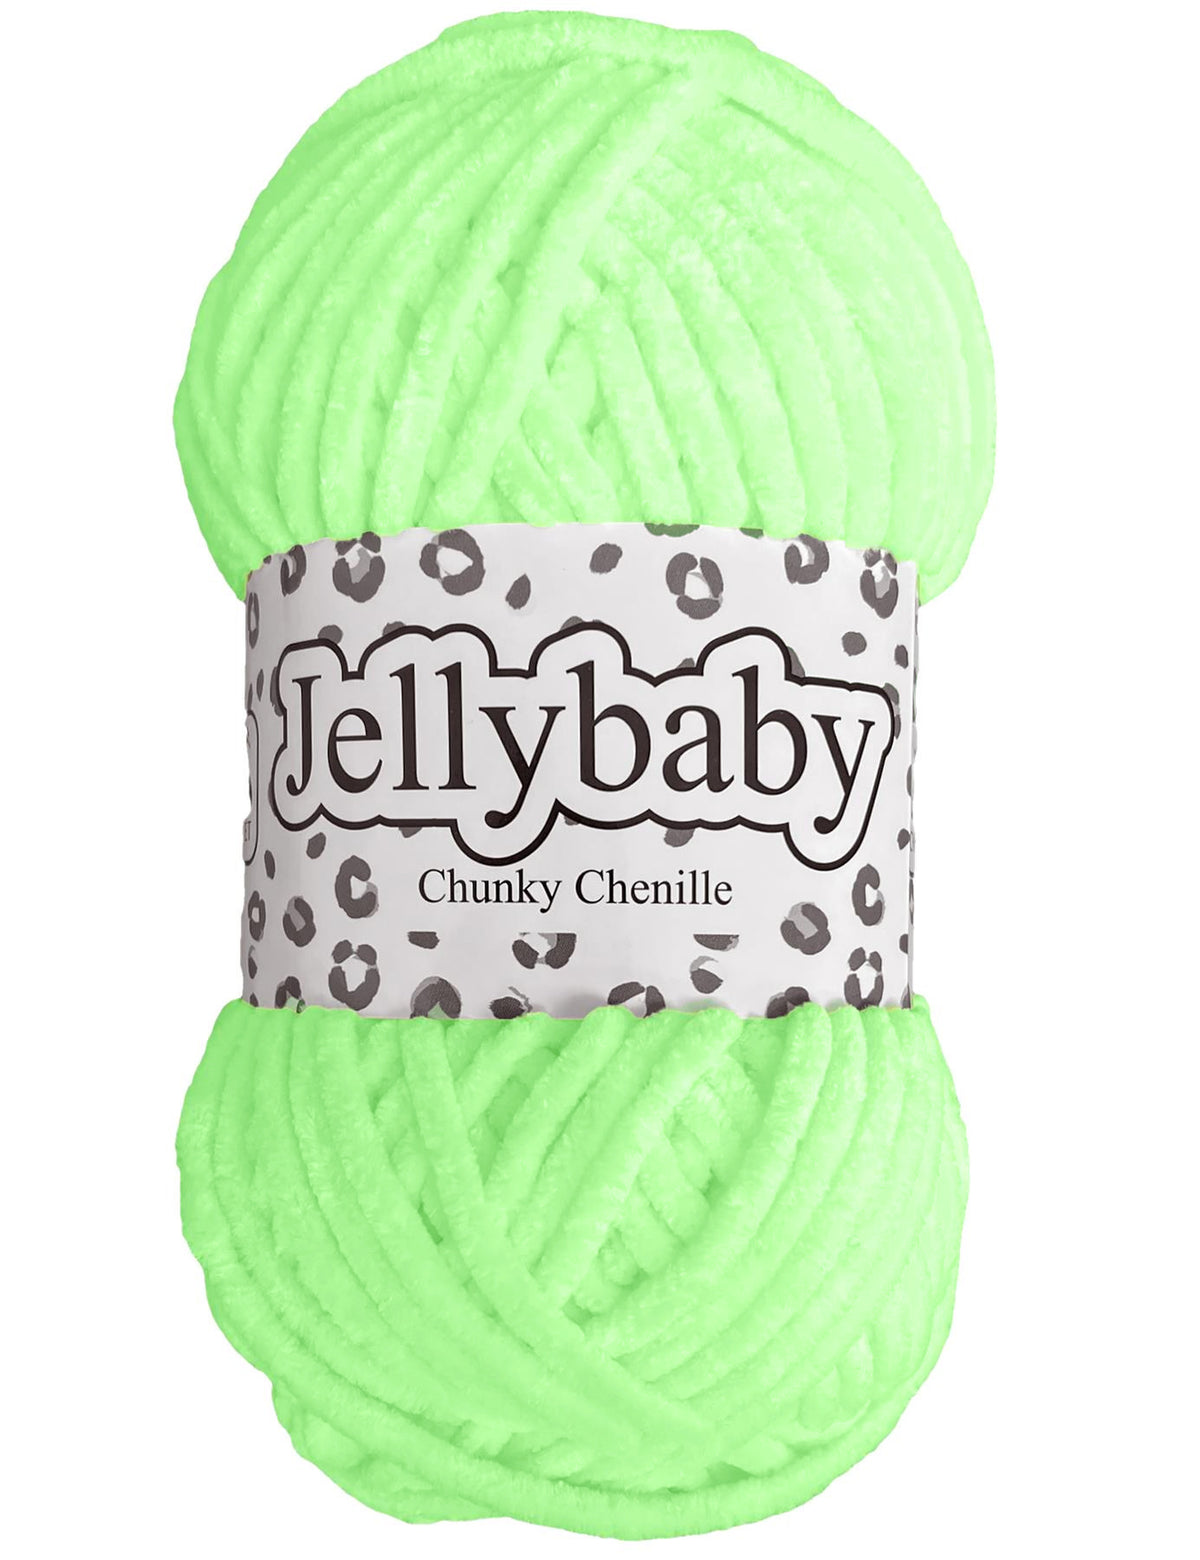 Cygnet Jellybaby Chenille Chunky Slime (033) -100g